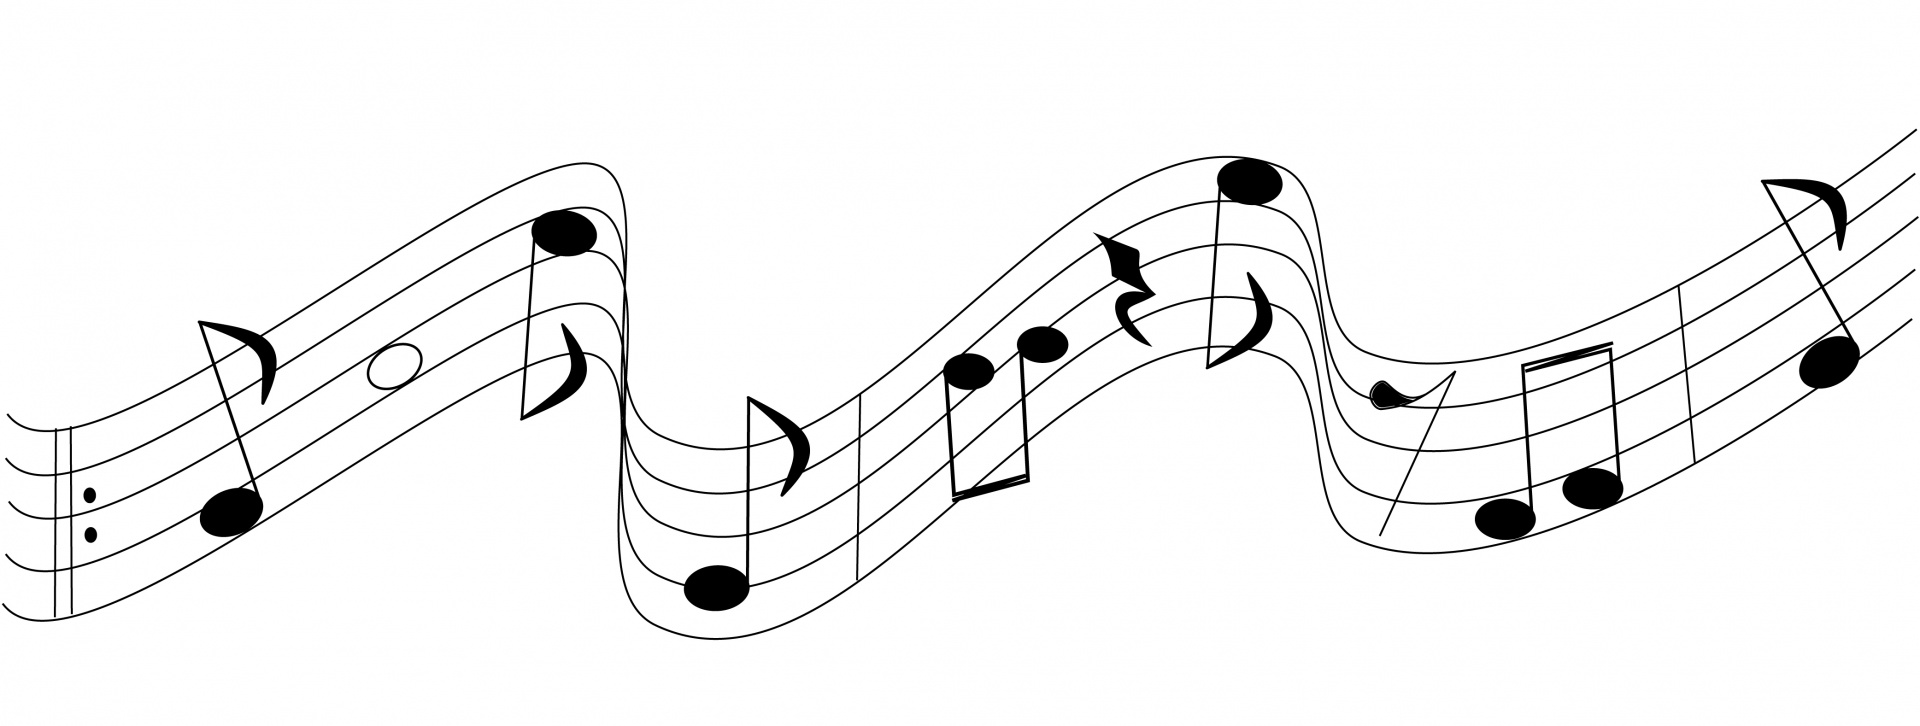 music-score-notes.jpg